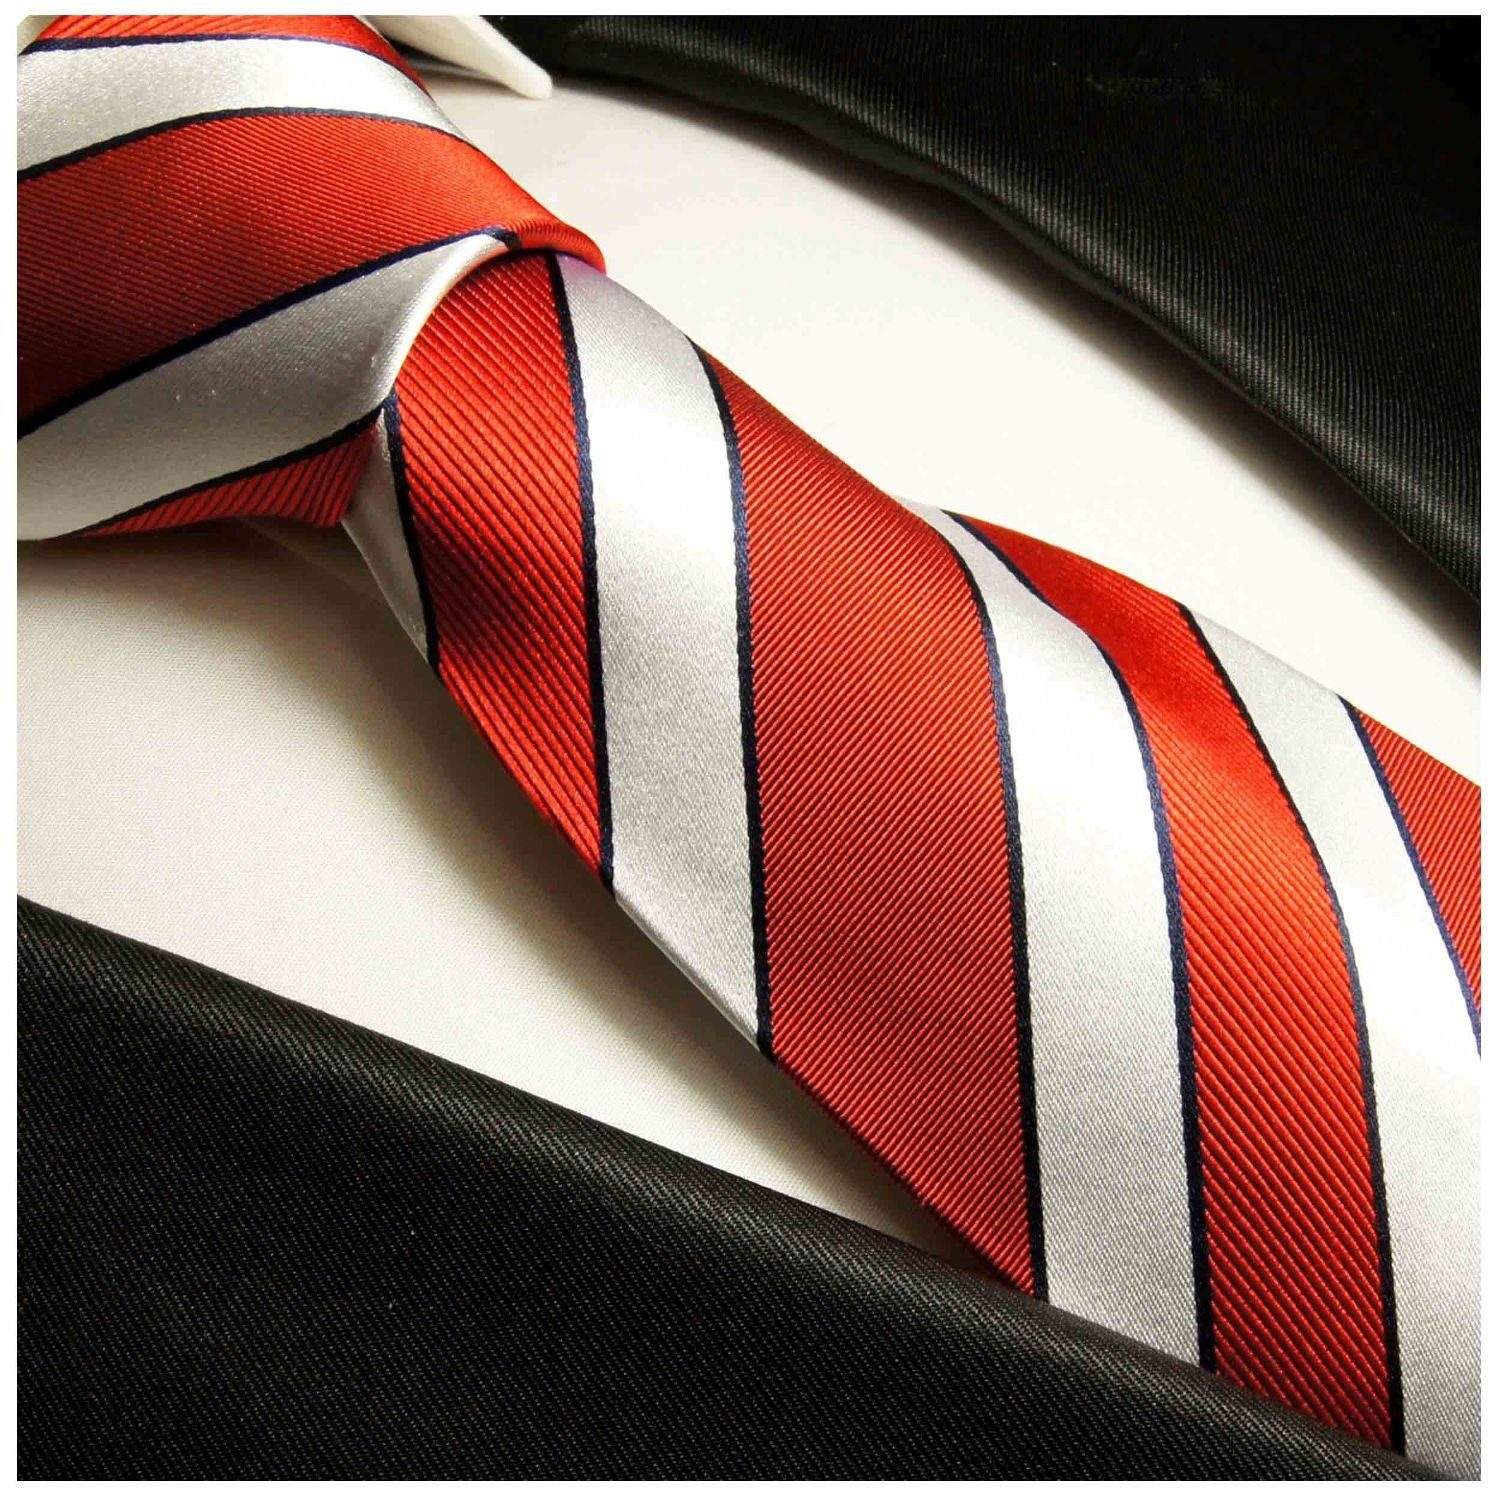 Seide Seidenkrawatte Schmal (6cm), silber 122 rot modern 100% Krawatte Herren Malone Paul Schlips gestreift